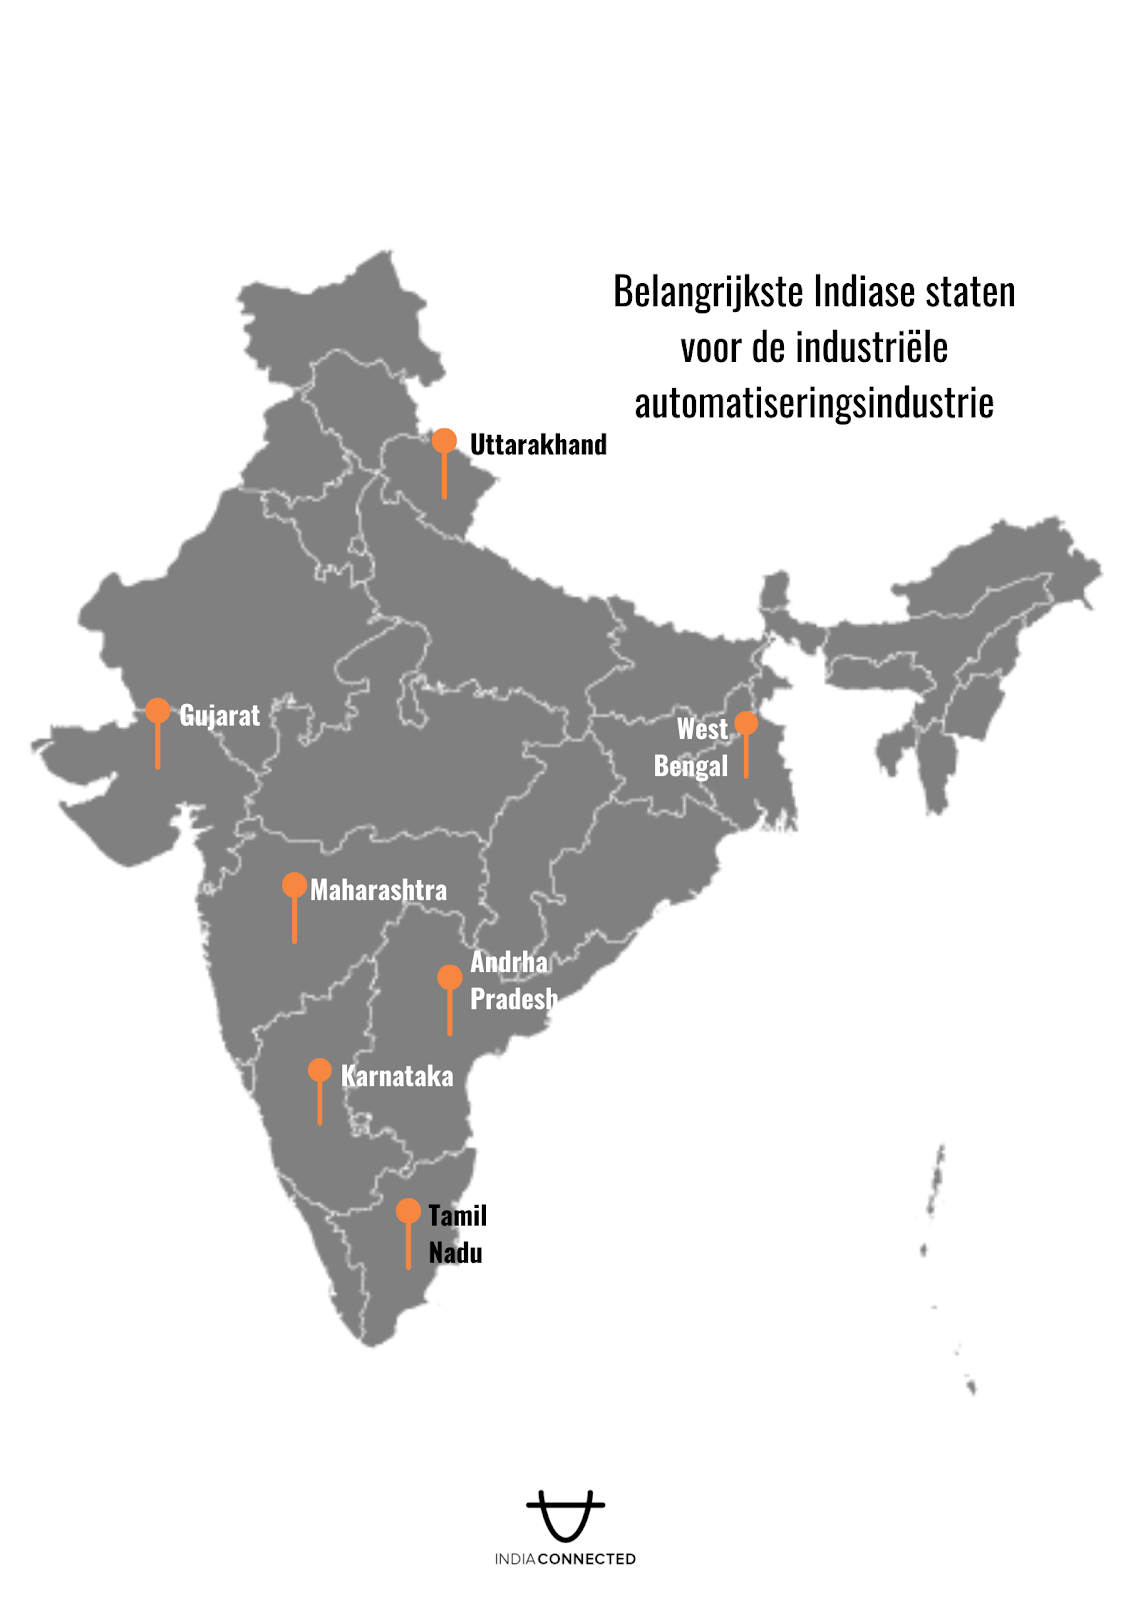 Kort over industriel automatisering i Indien